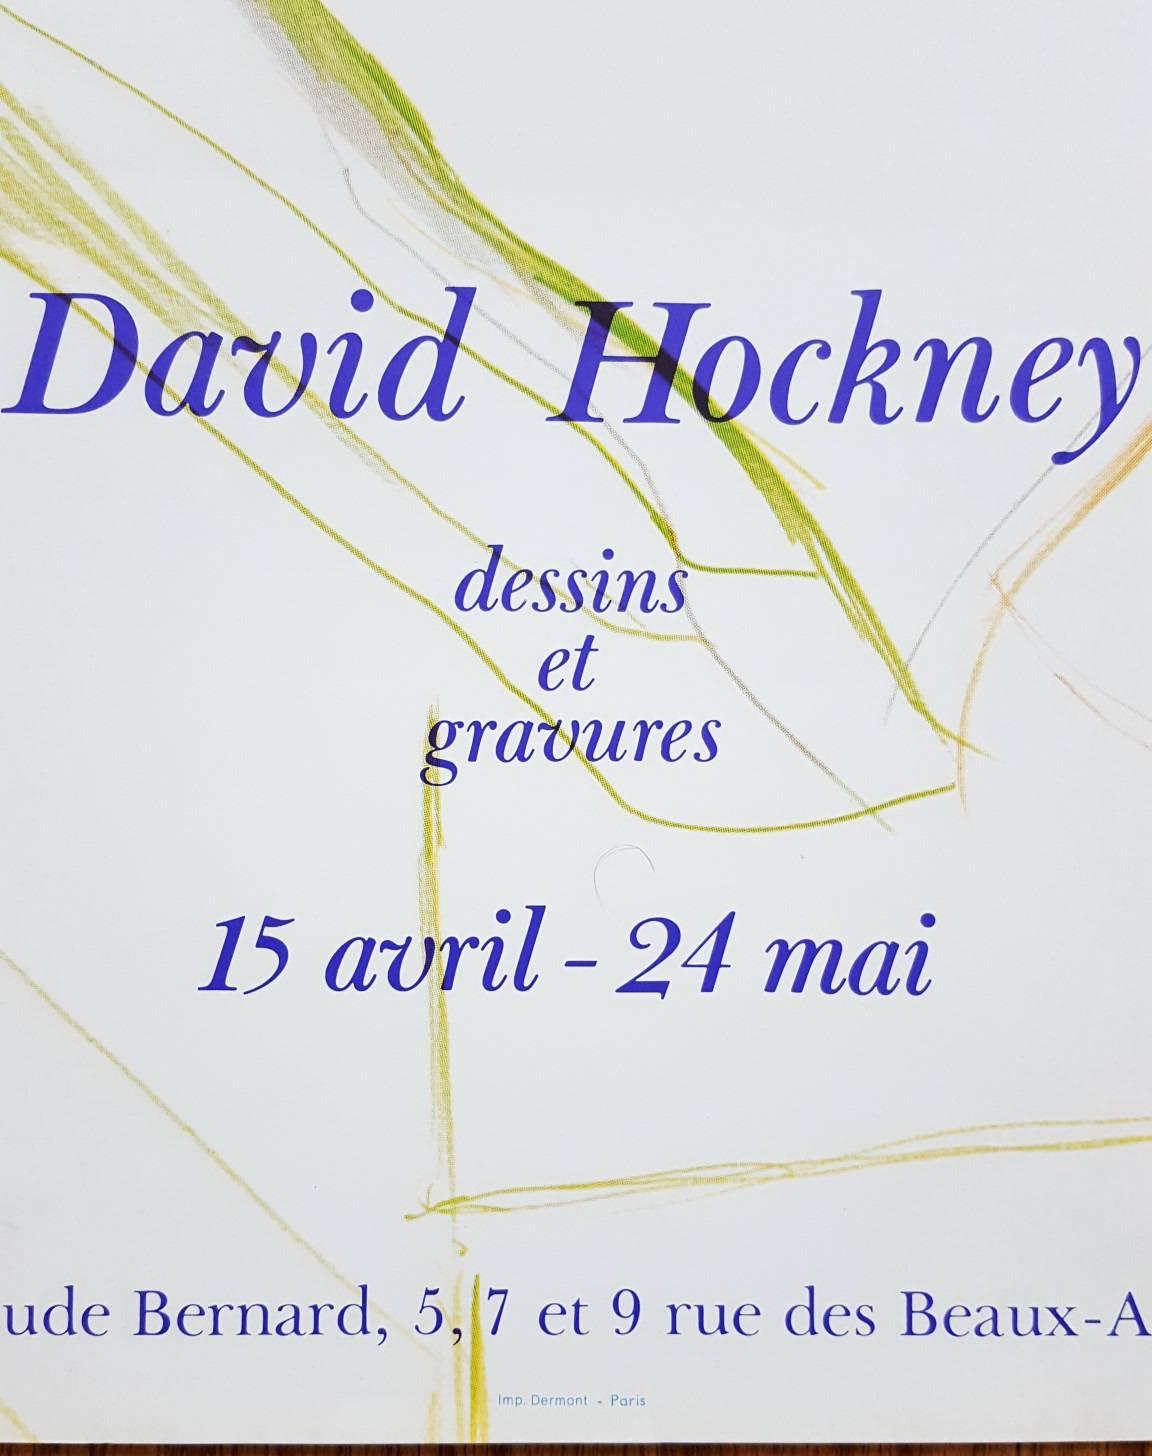 Jacques de Bascher de Beaumarchais - Print by (after) David Hockney